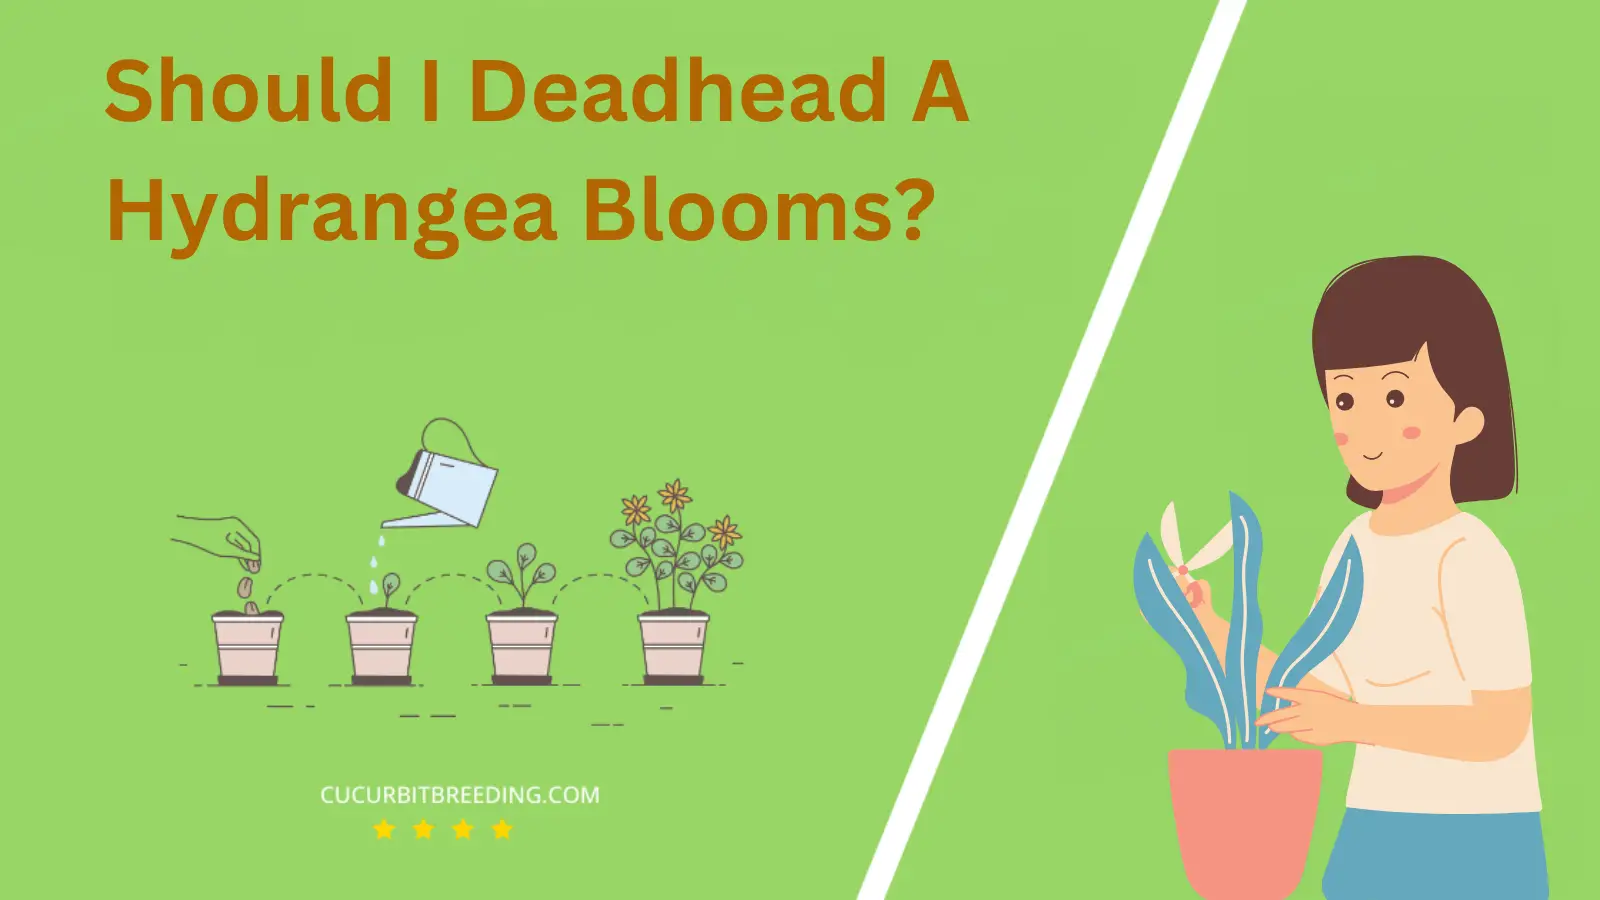 Should I Deadhead A Hydrangea Blooms?